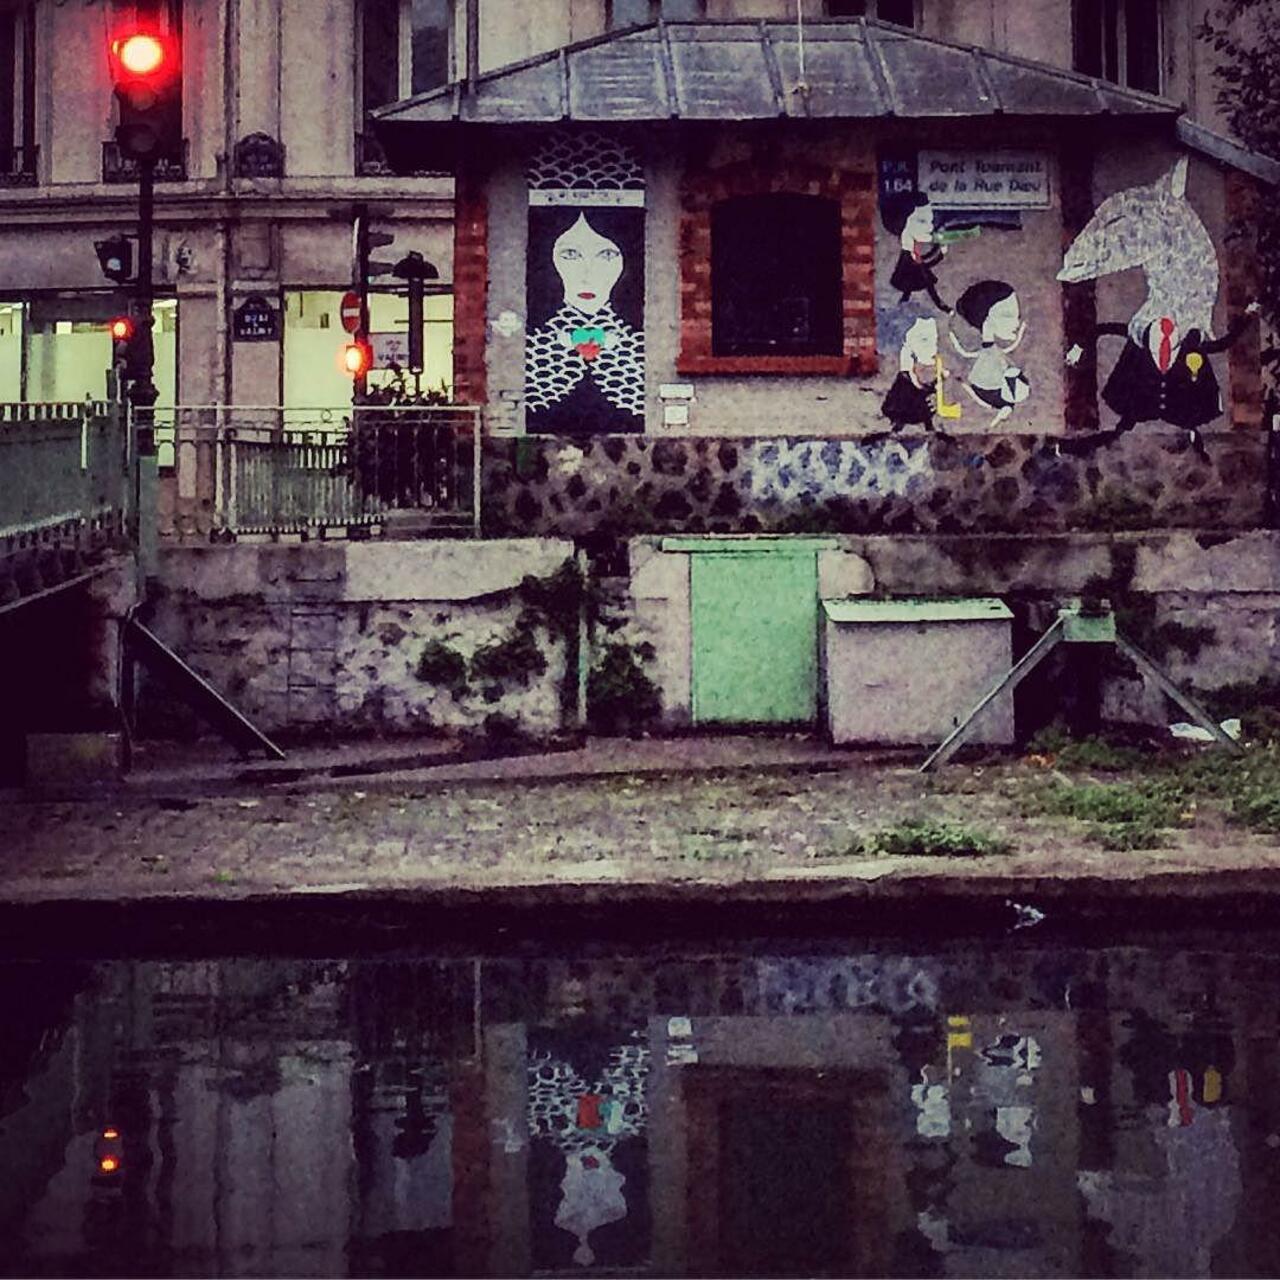 #Paris #graffiti photo by @allaboutparisandbeyond http://ift.tt/1MvqM8s #StreetArt http://t.co/0EDpxw52Wh